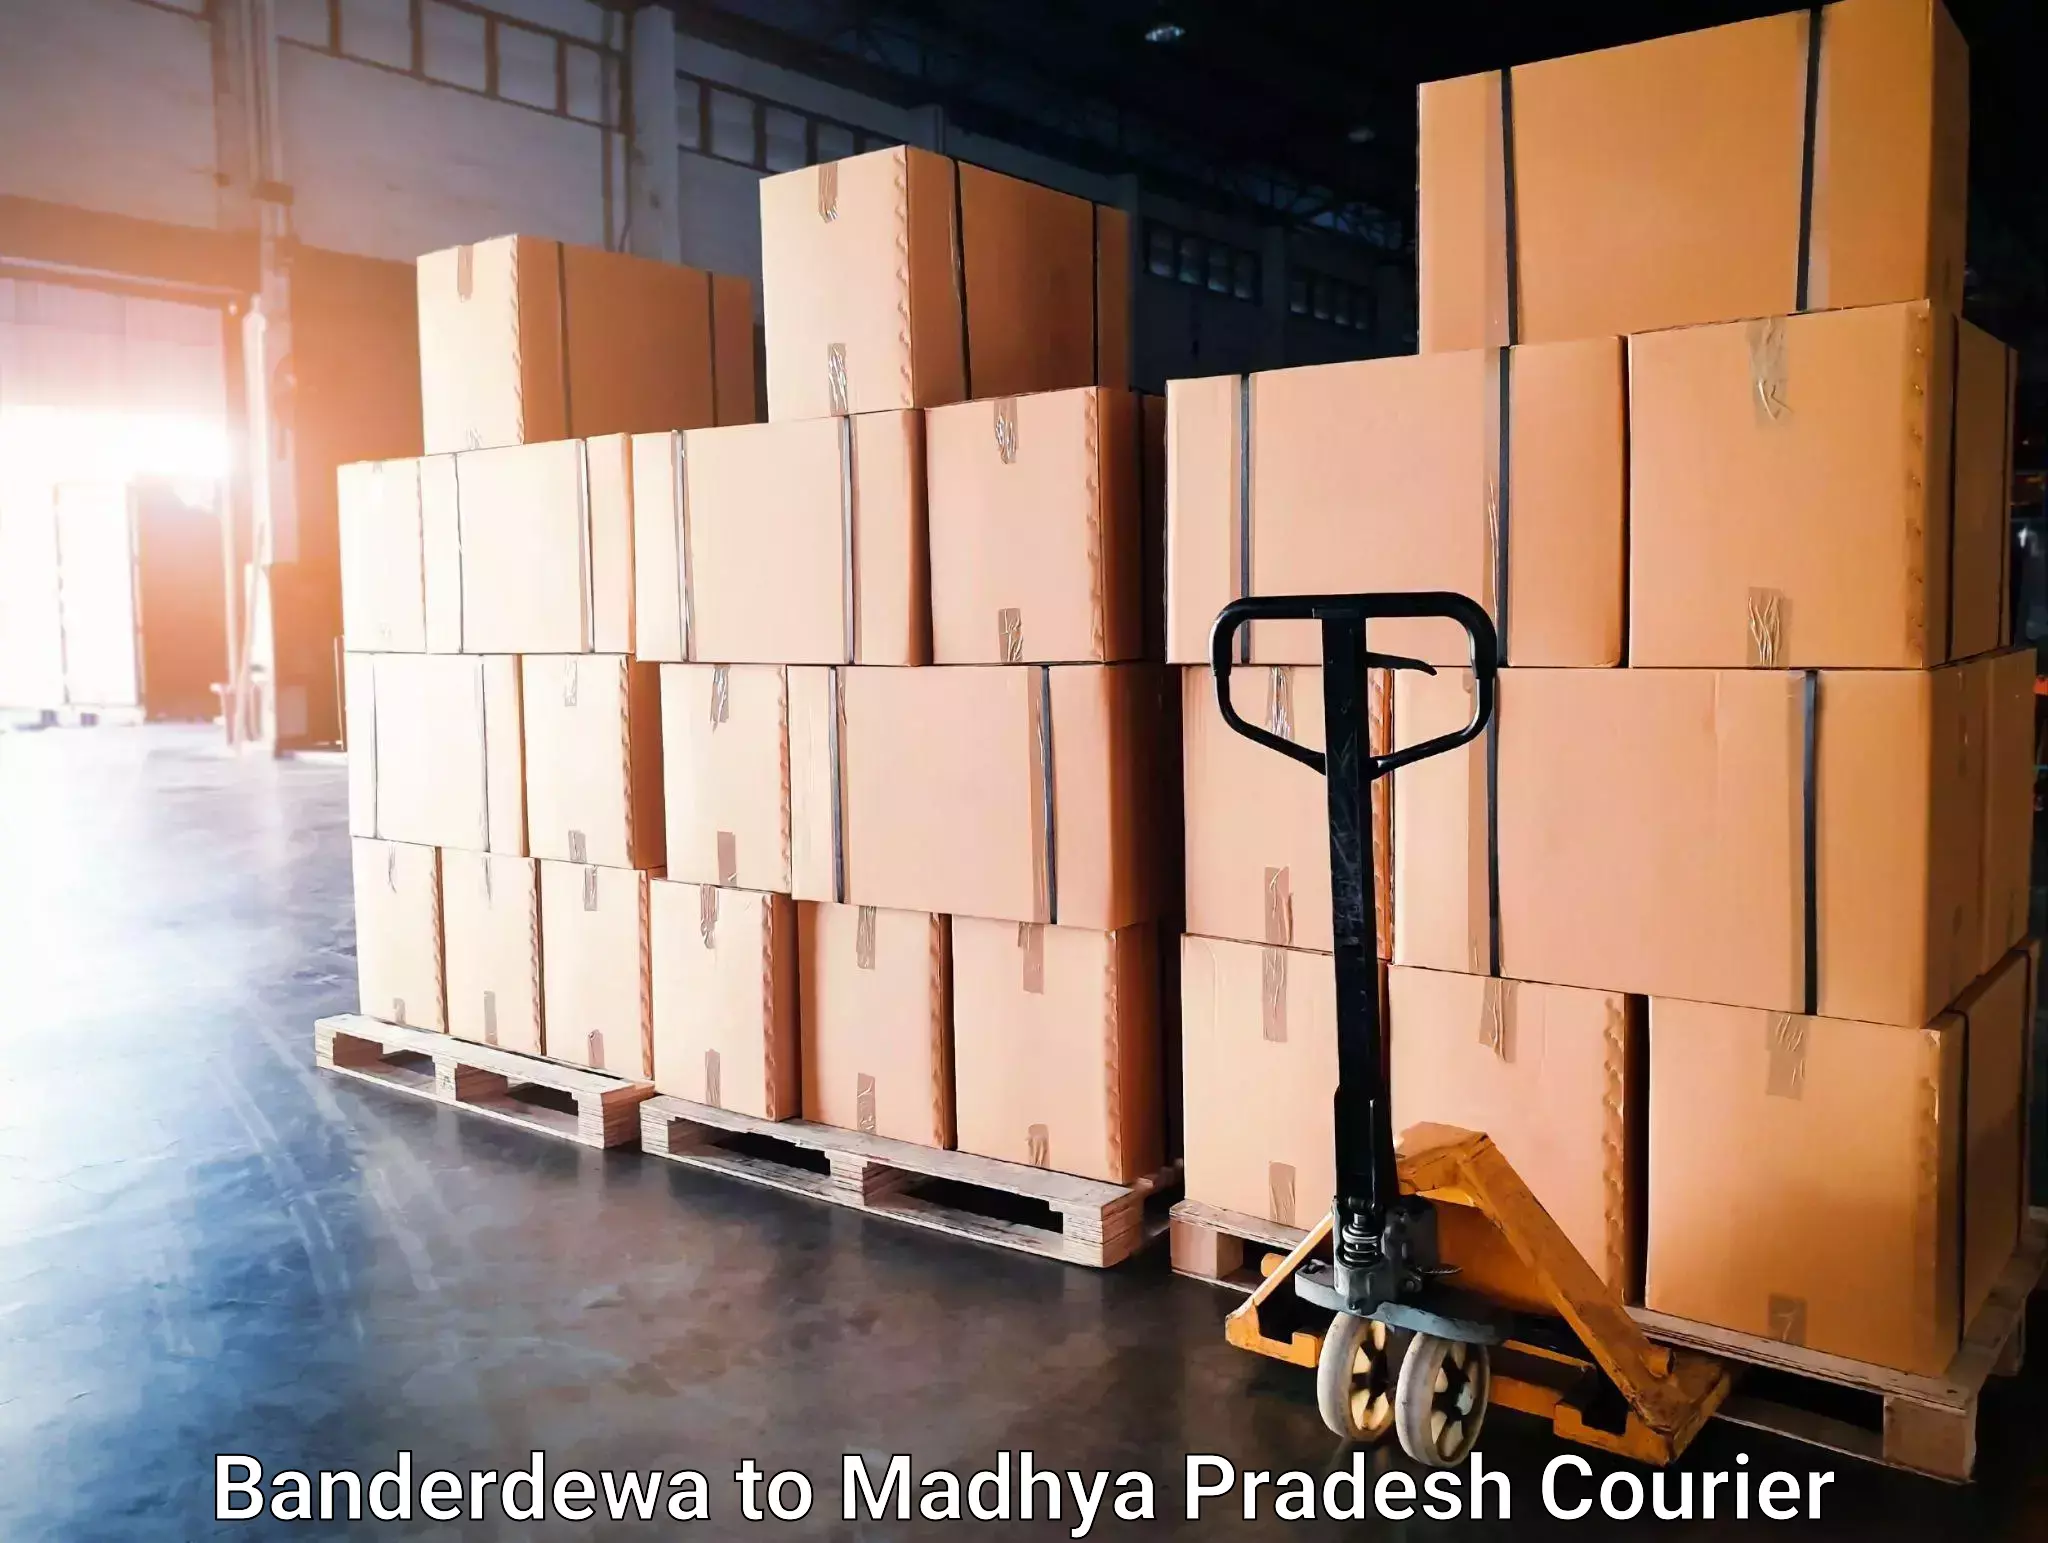 24-hour courier service in Banderdewa to Burhanpur